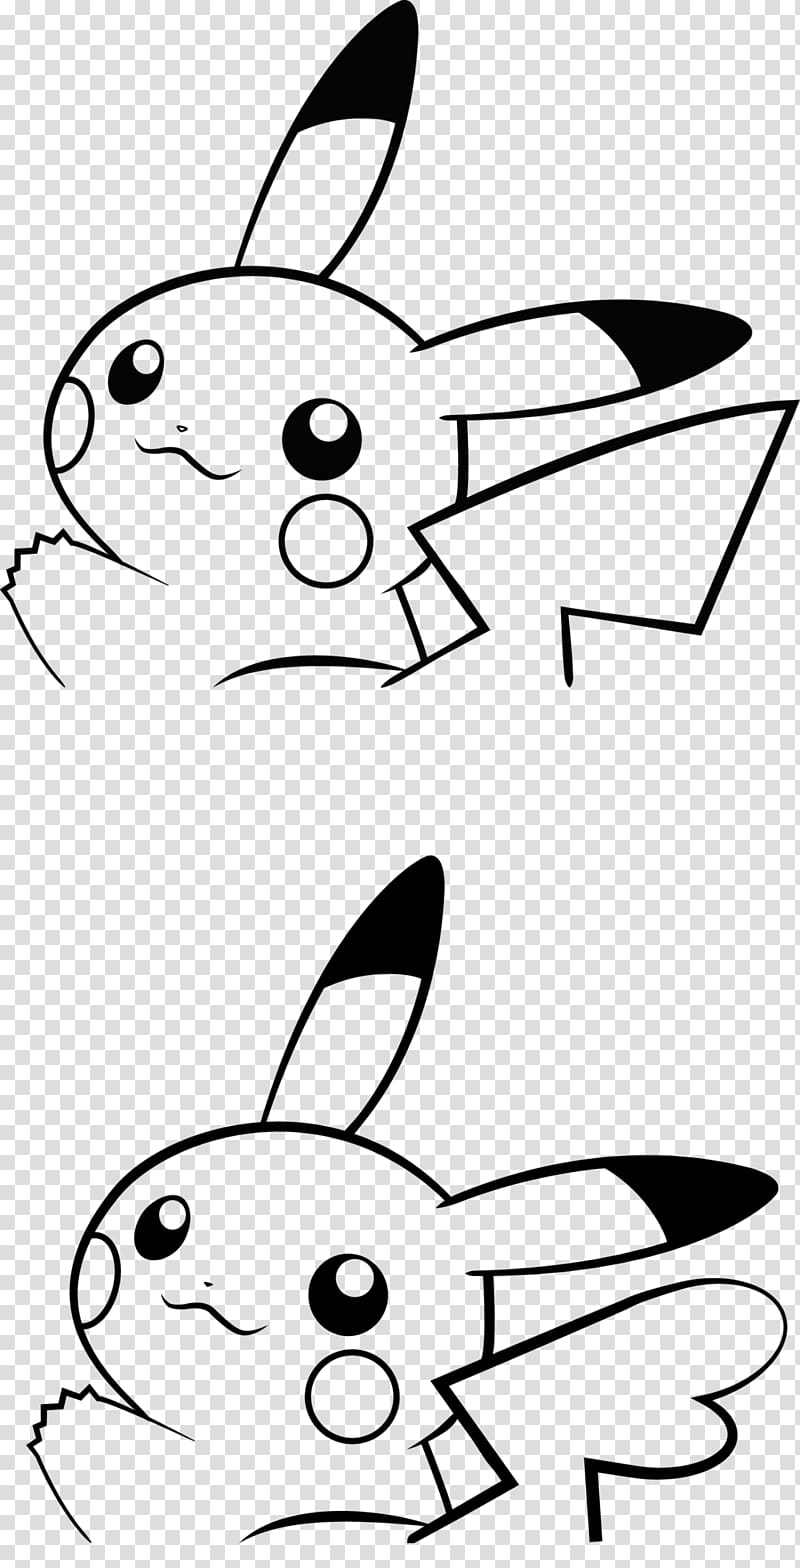 Pikachu Black and white Pokemon Black & White Ash Ketchum , pikachu transparent background PNG clipart